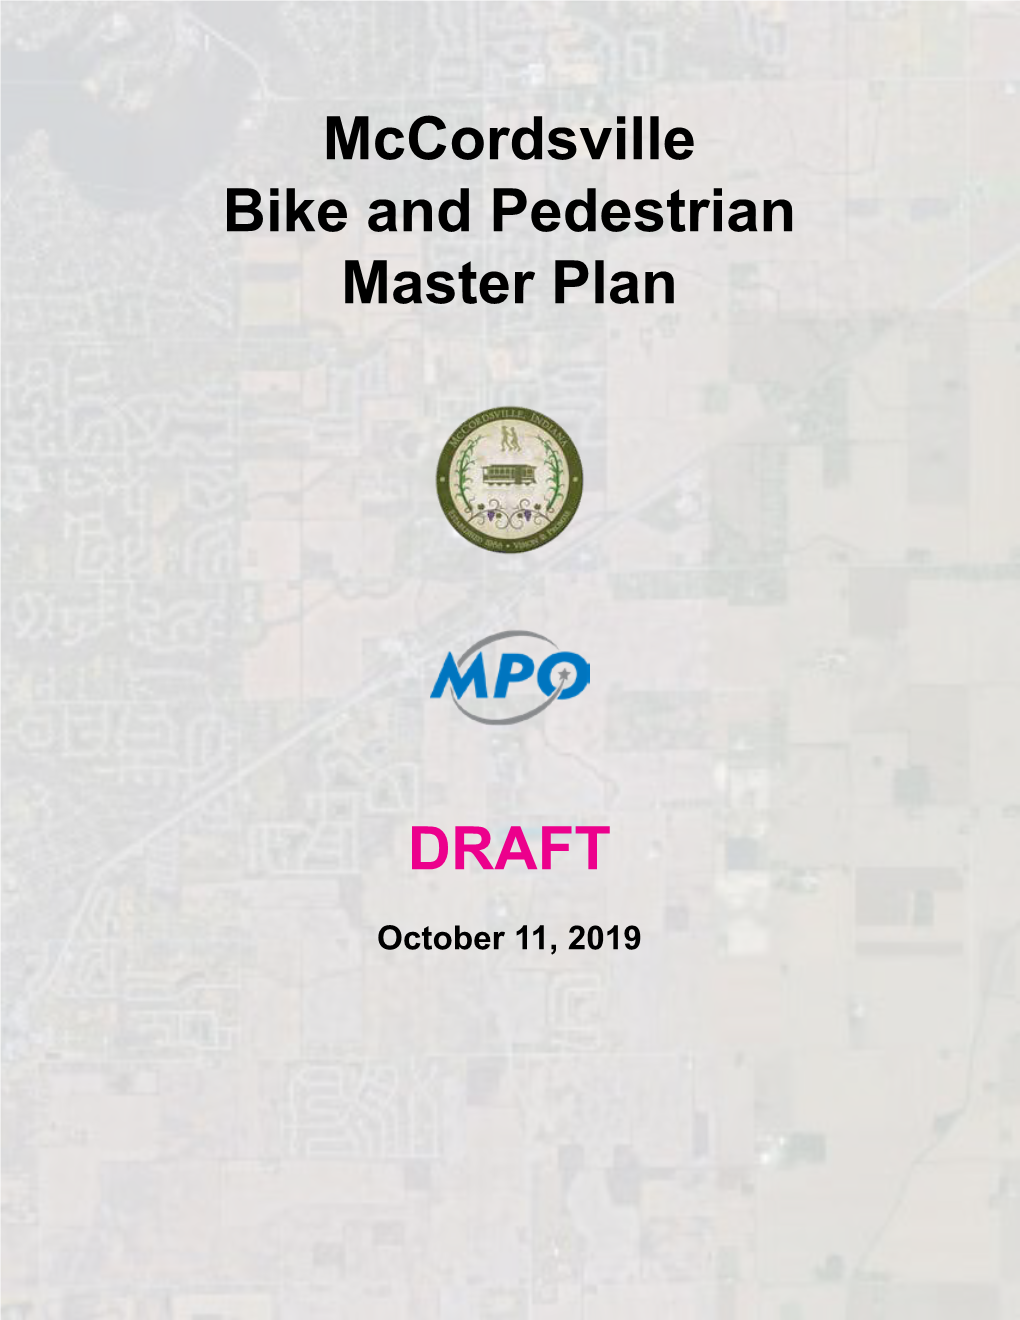 Mccordsville Bike and Pedestrian Master Plan DRAFT